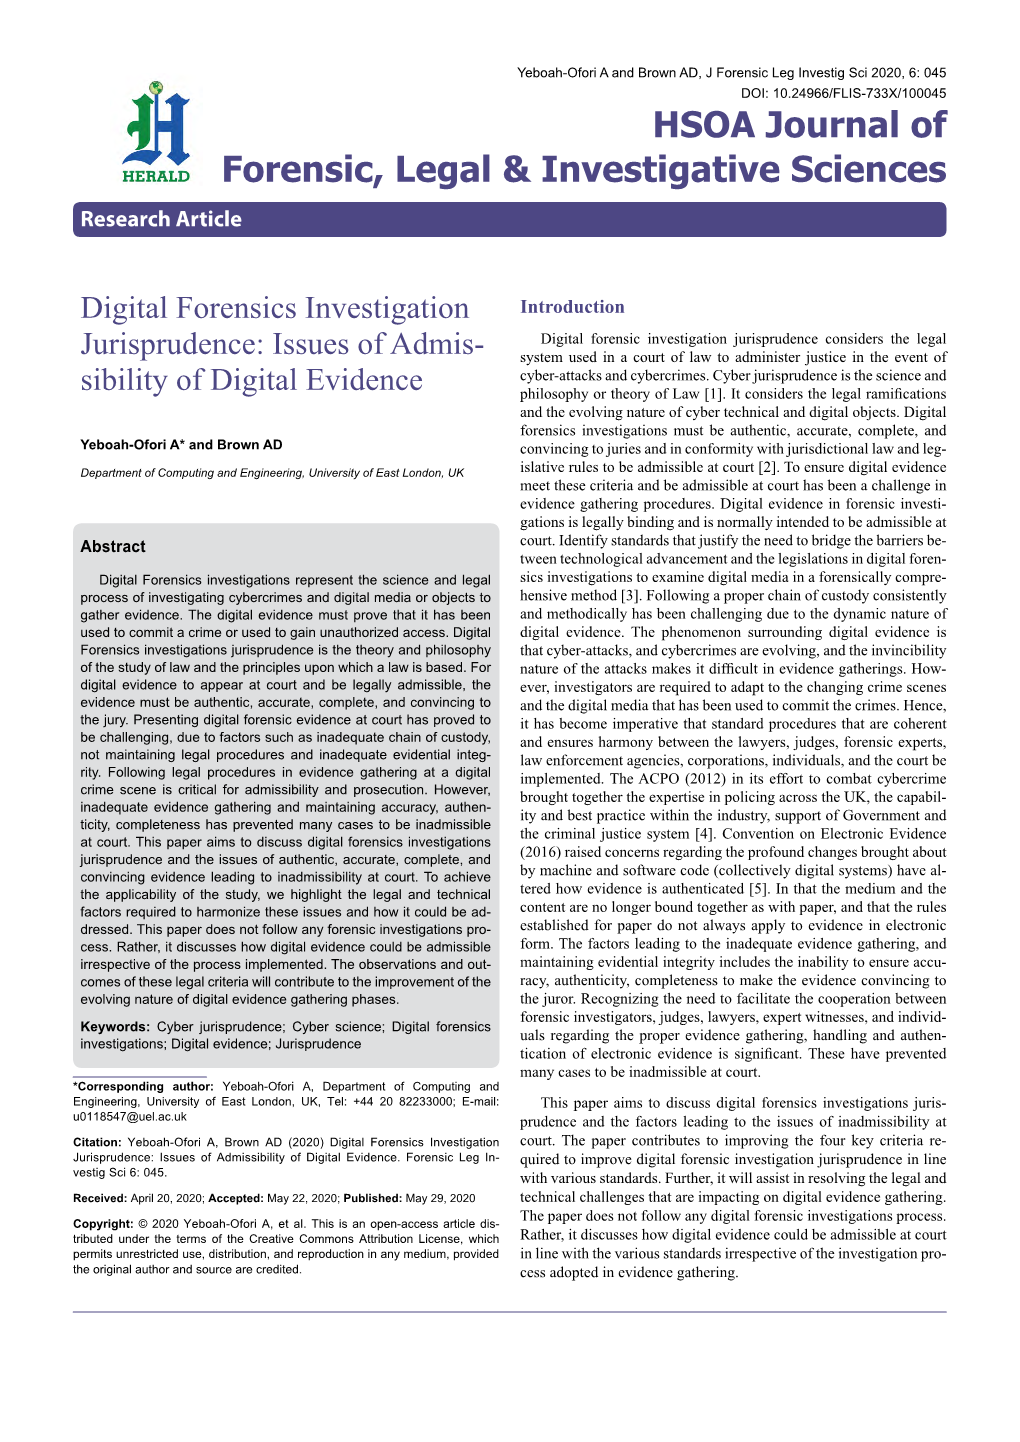 Digital Forensics Investigation Jurisprudence: Issues of Admissibility of Digital Evidence